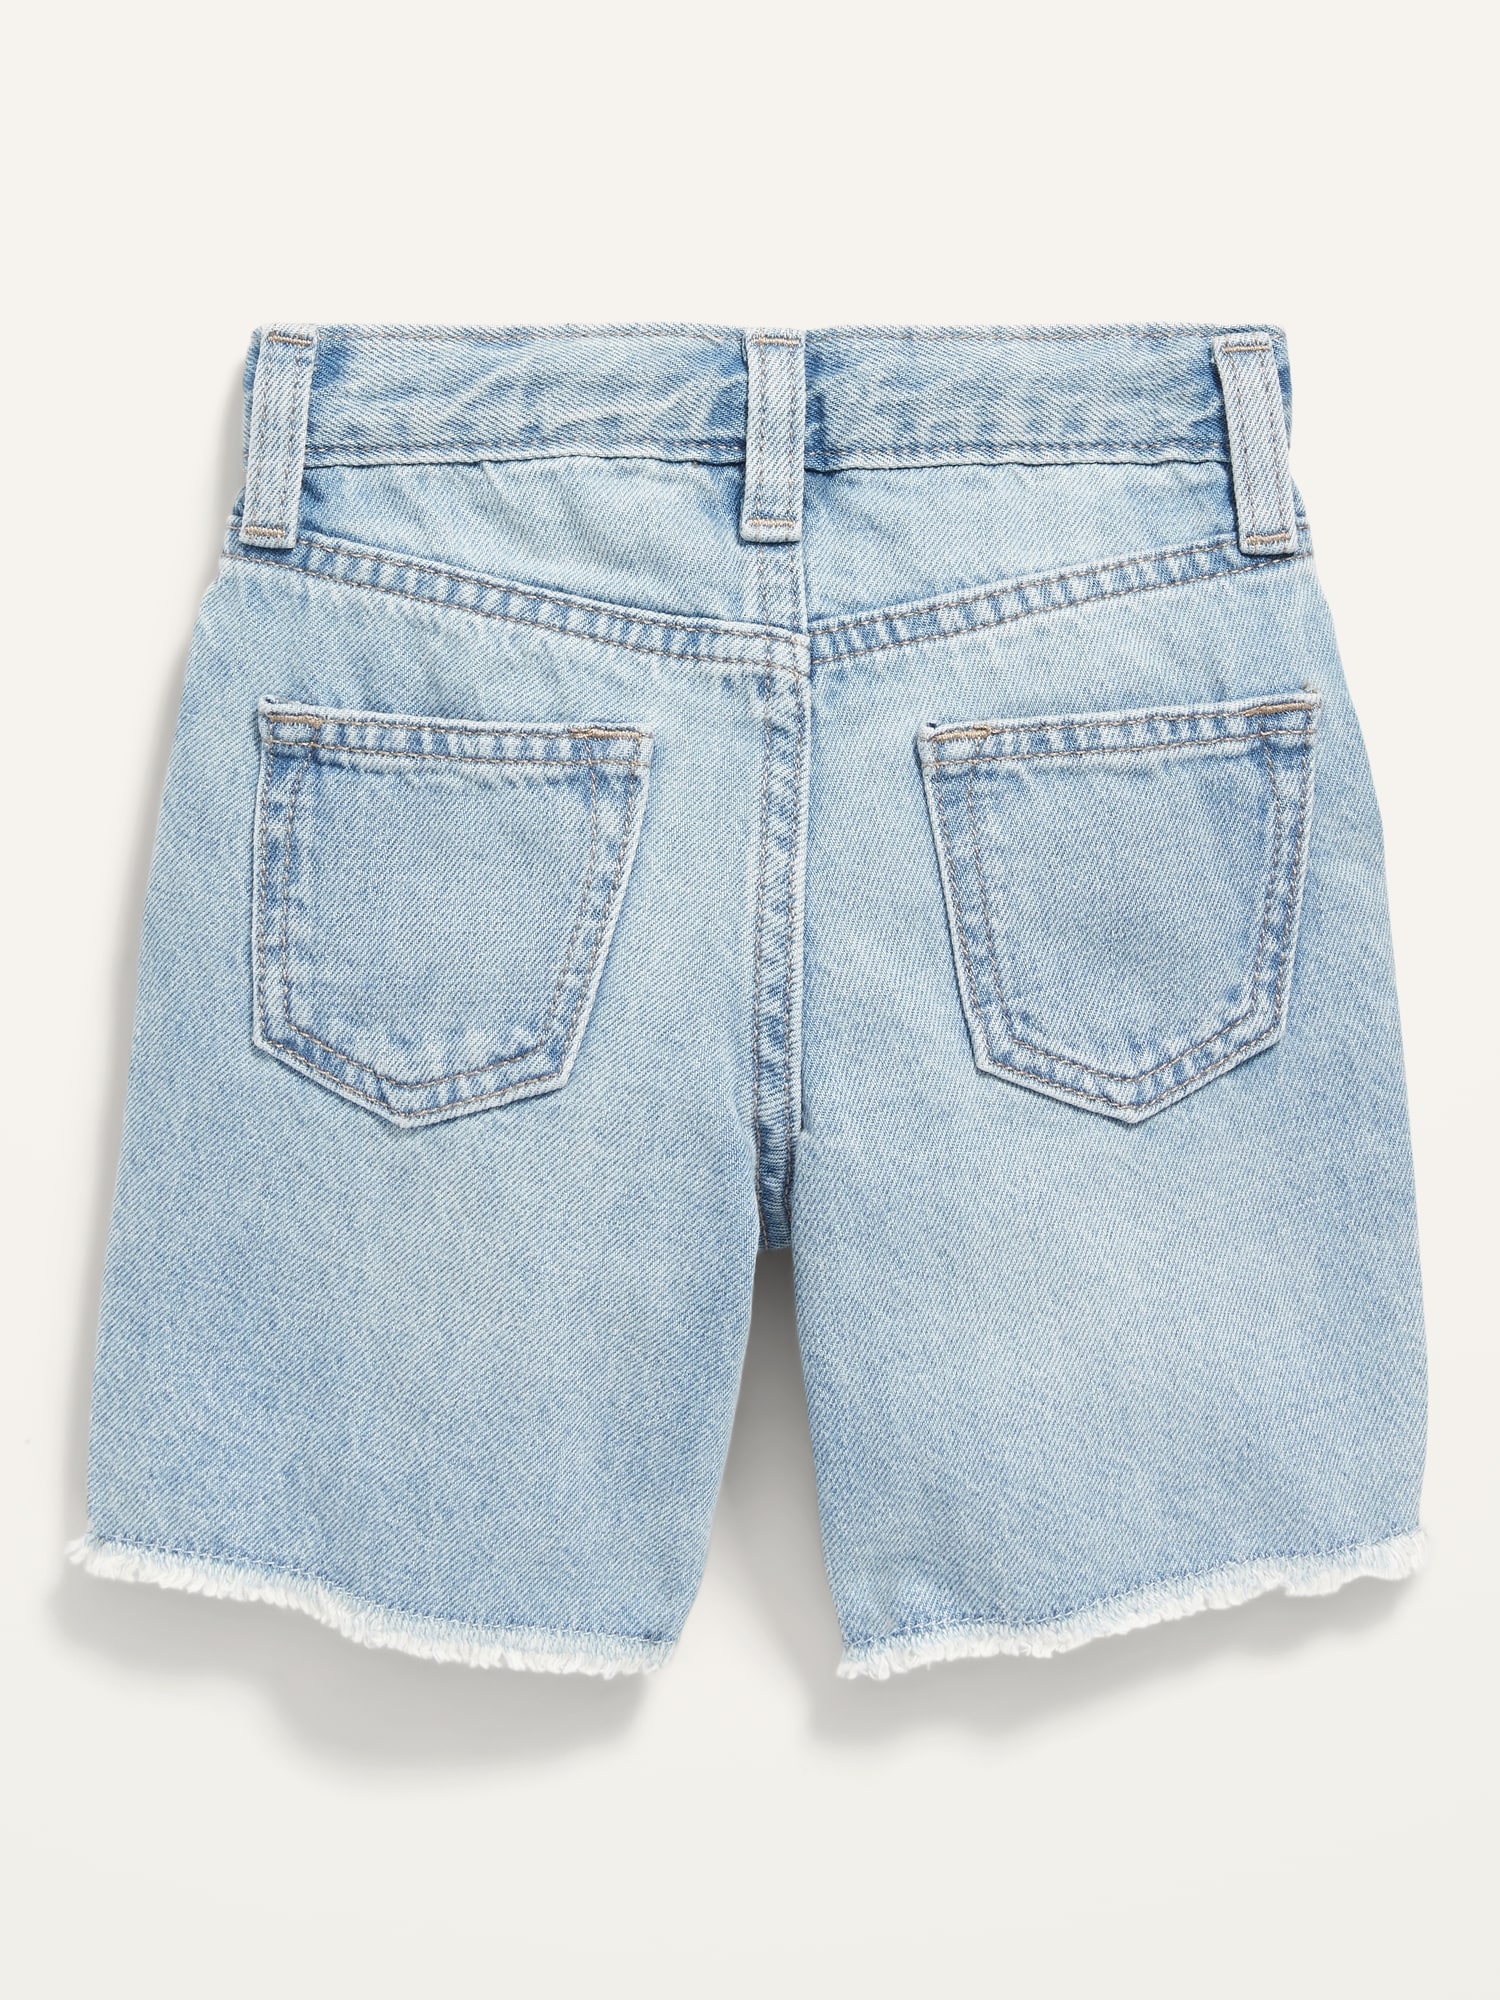 Kid Boy Letter Print Ripped Denim Jeans Shorts